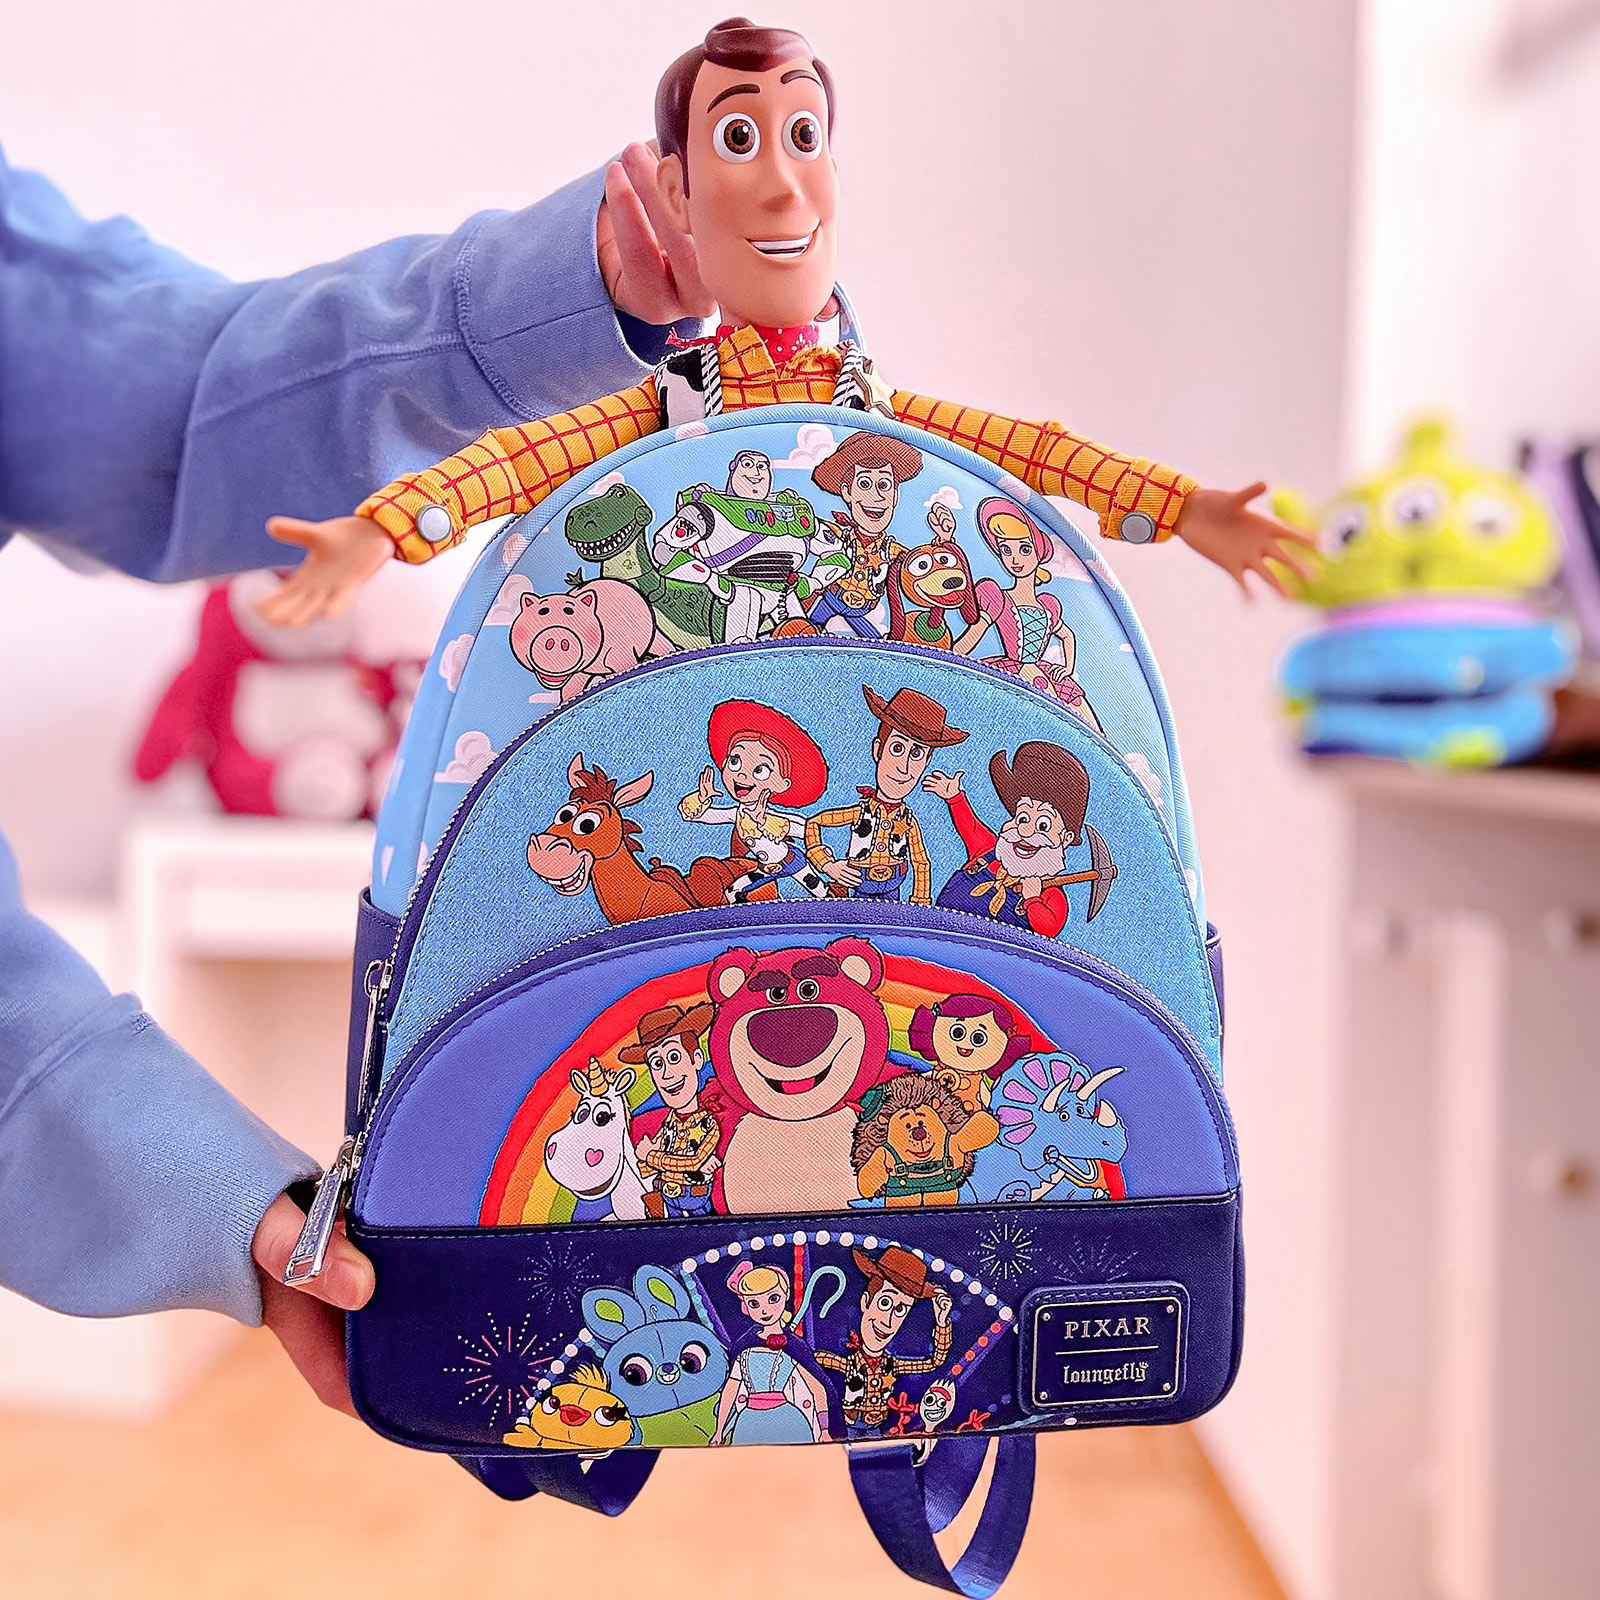 Toy Story Movie Mini Rucksack